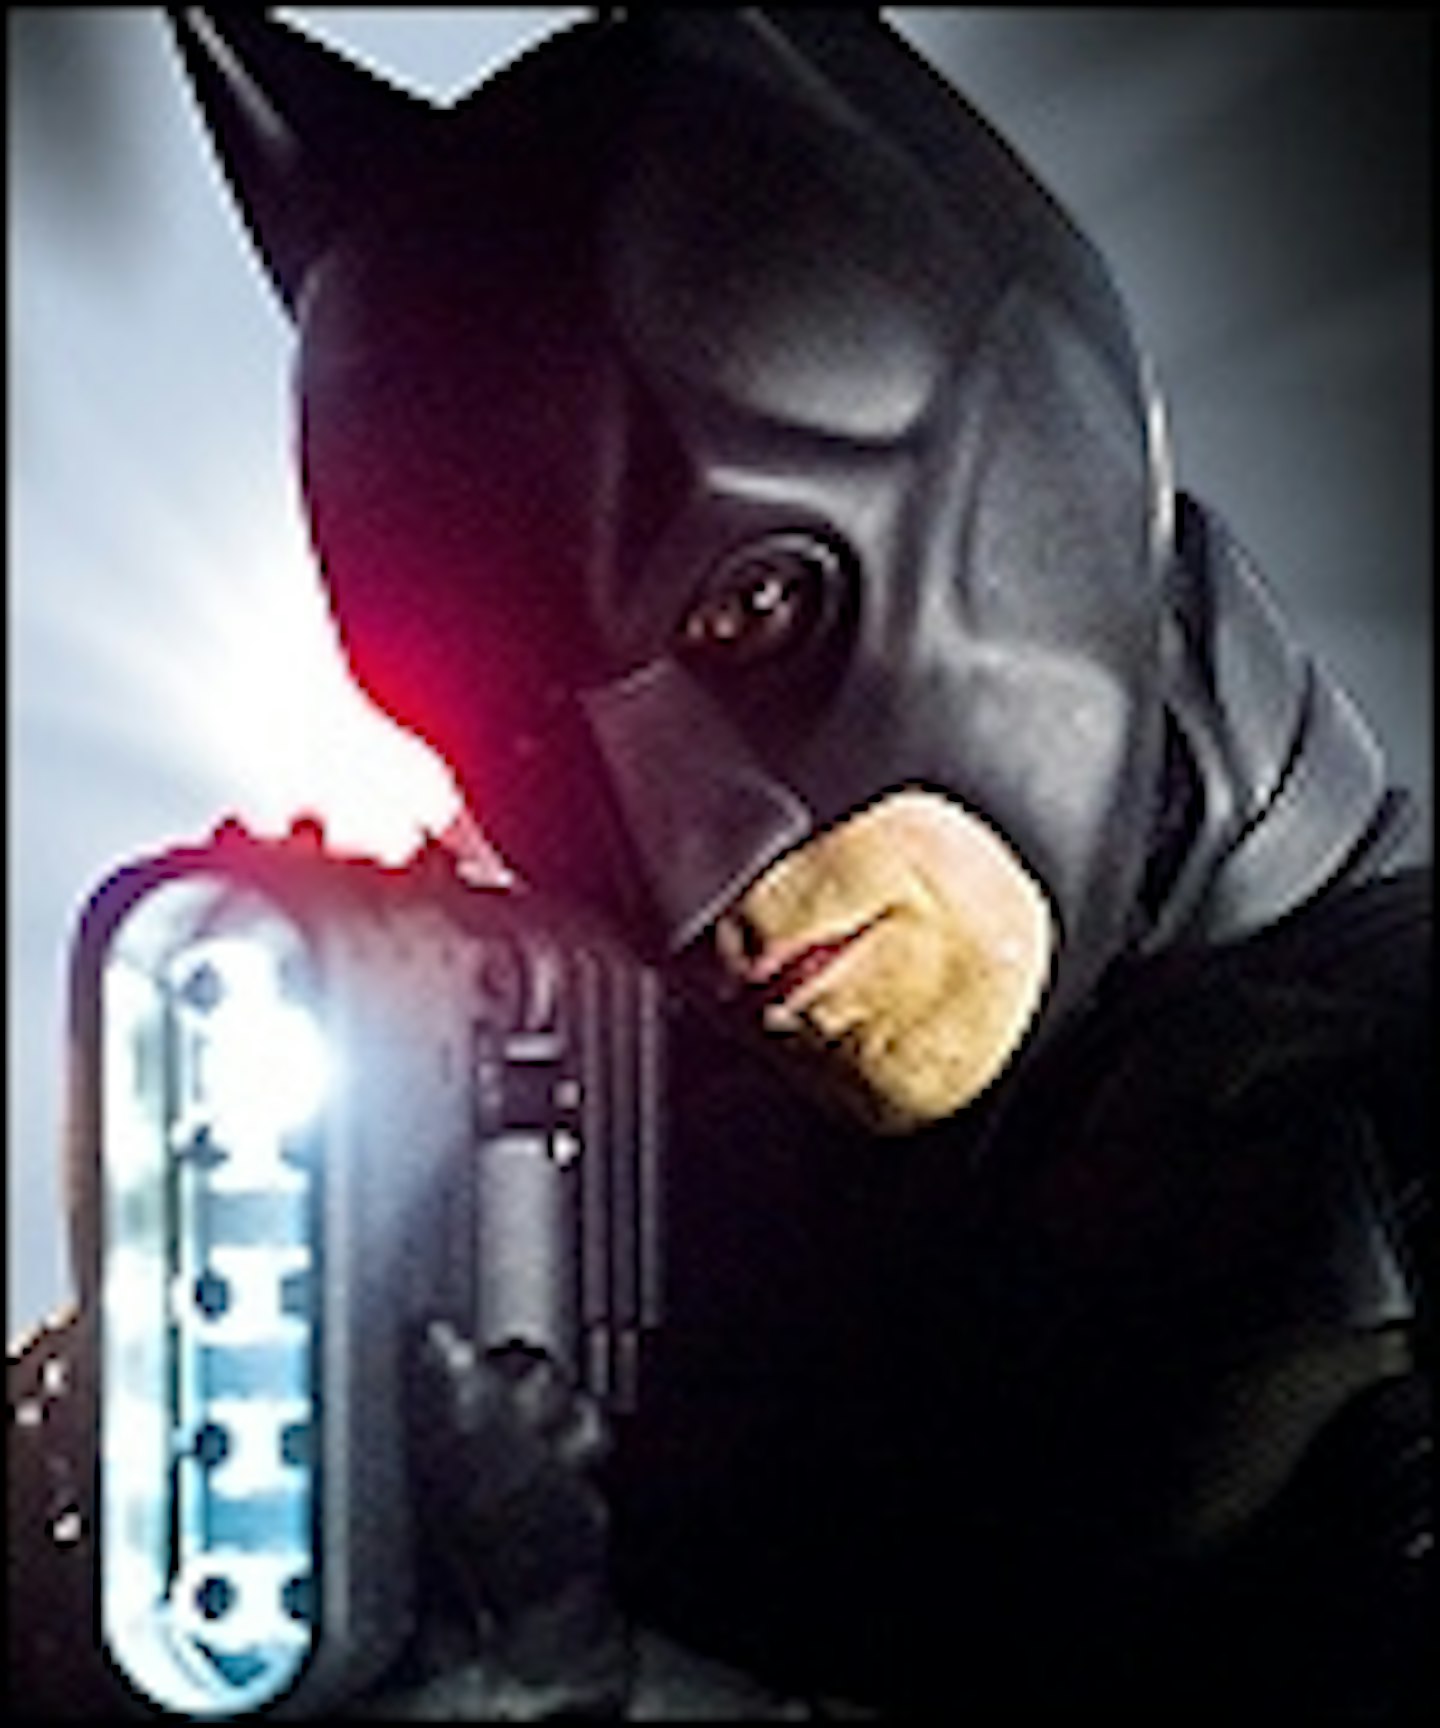 New Dark Knight Rises Trailer Lands